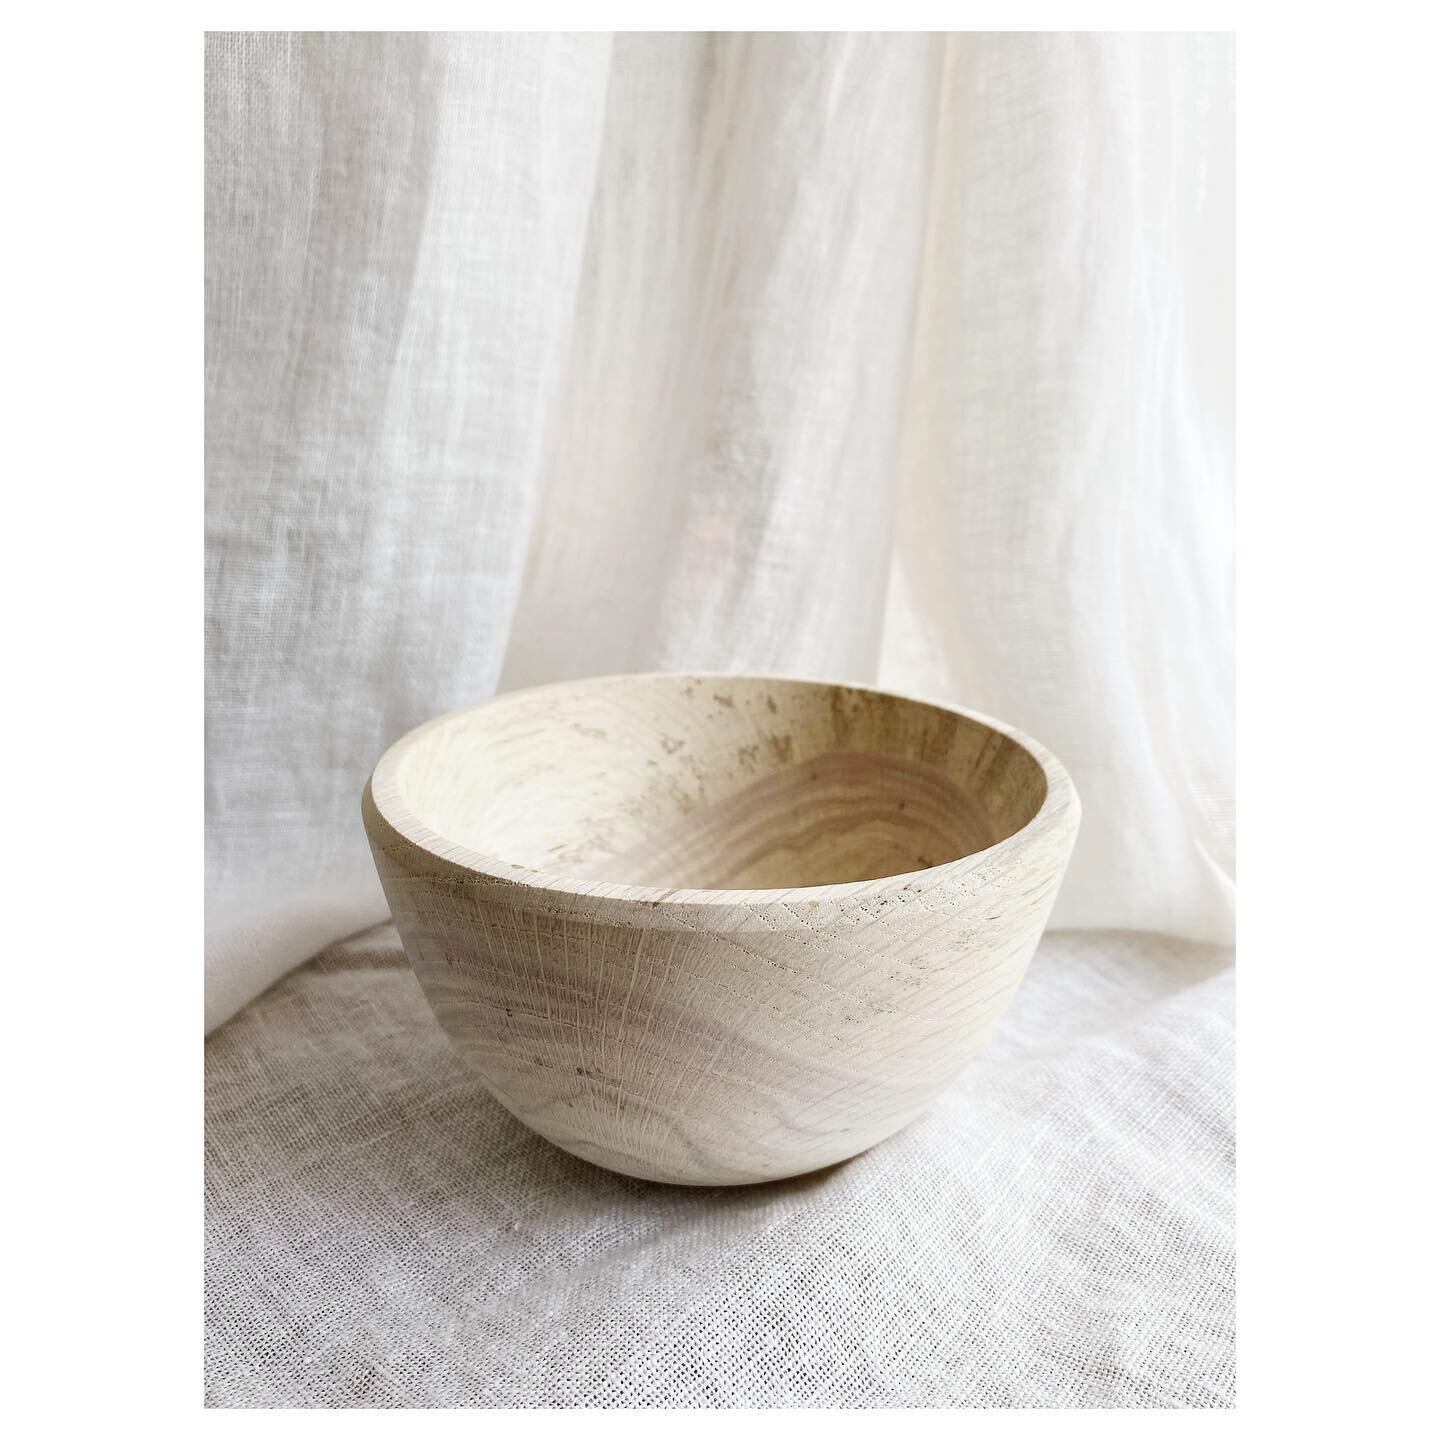 Bleached Lauren oak bowl